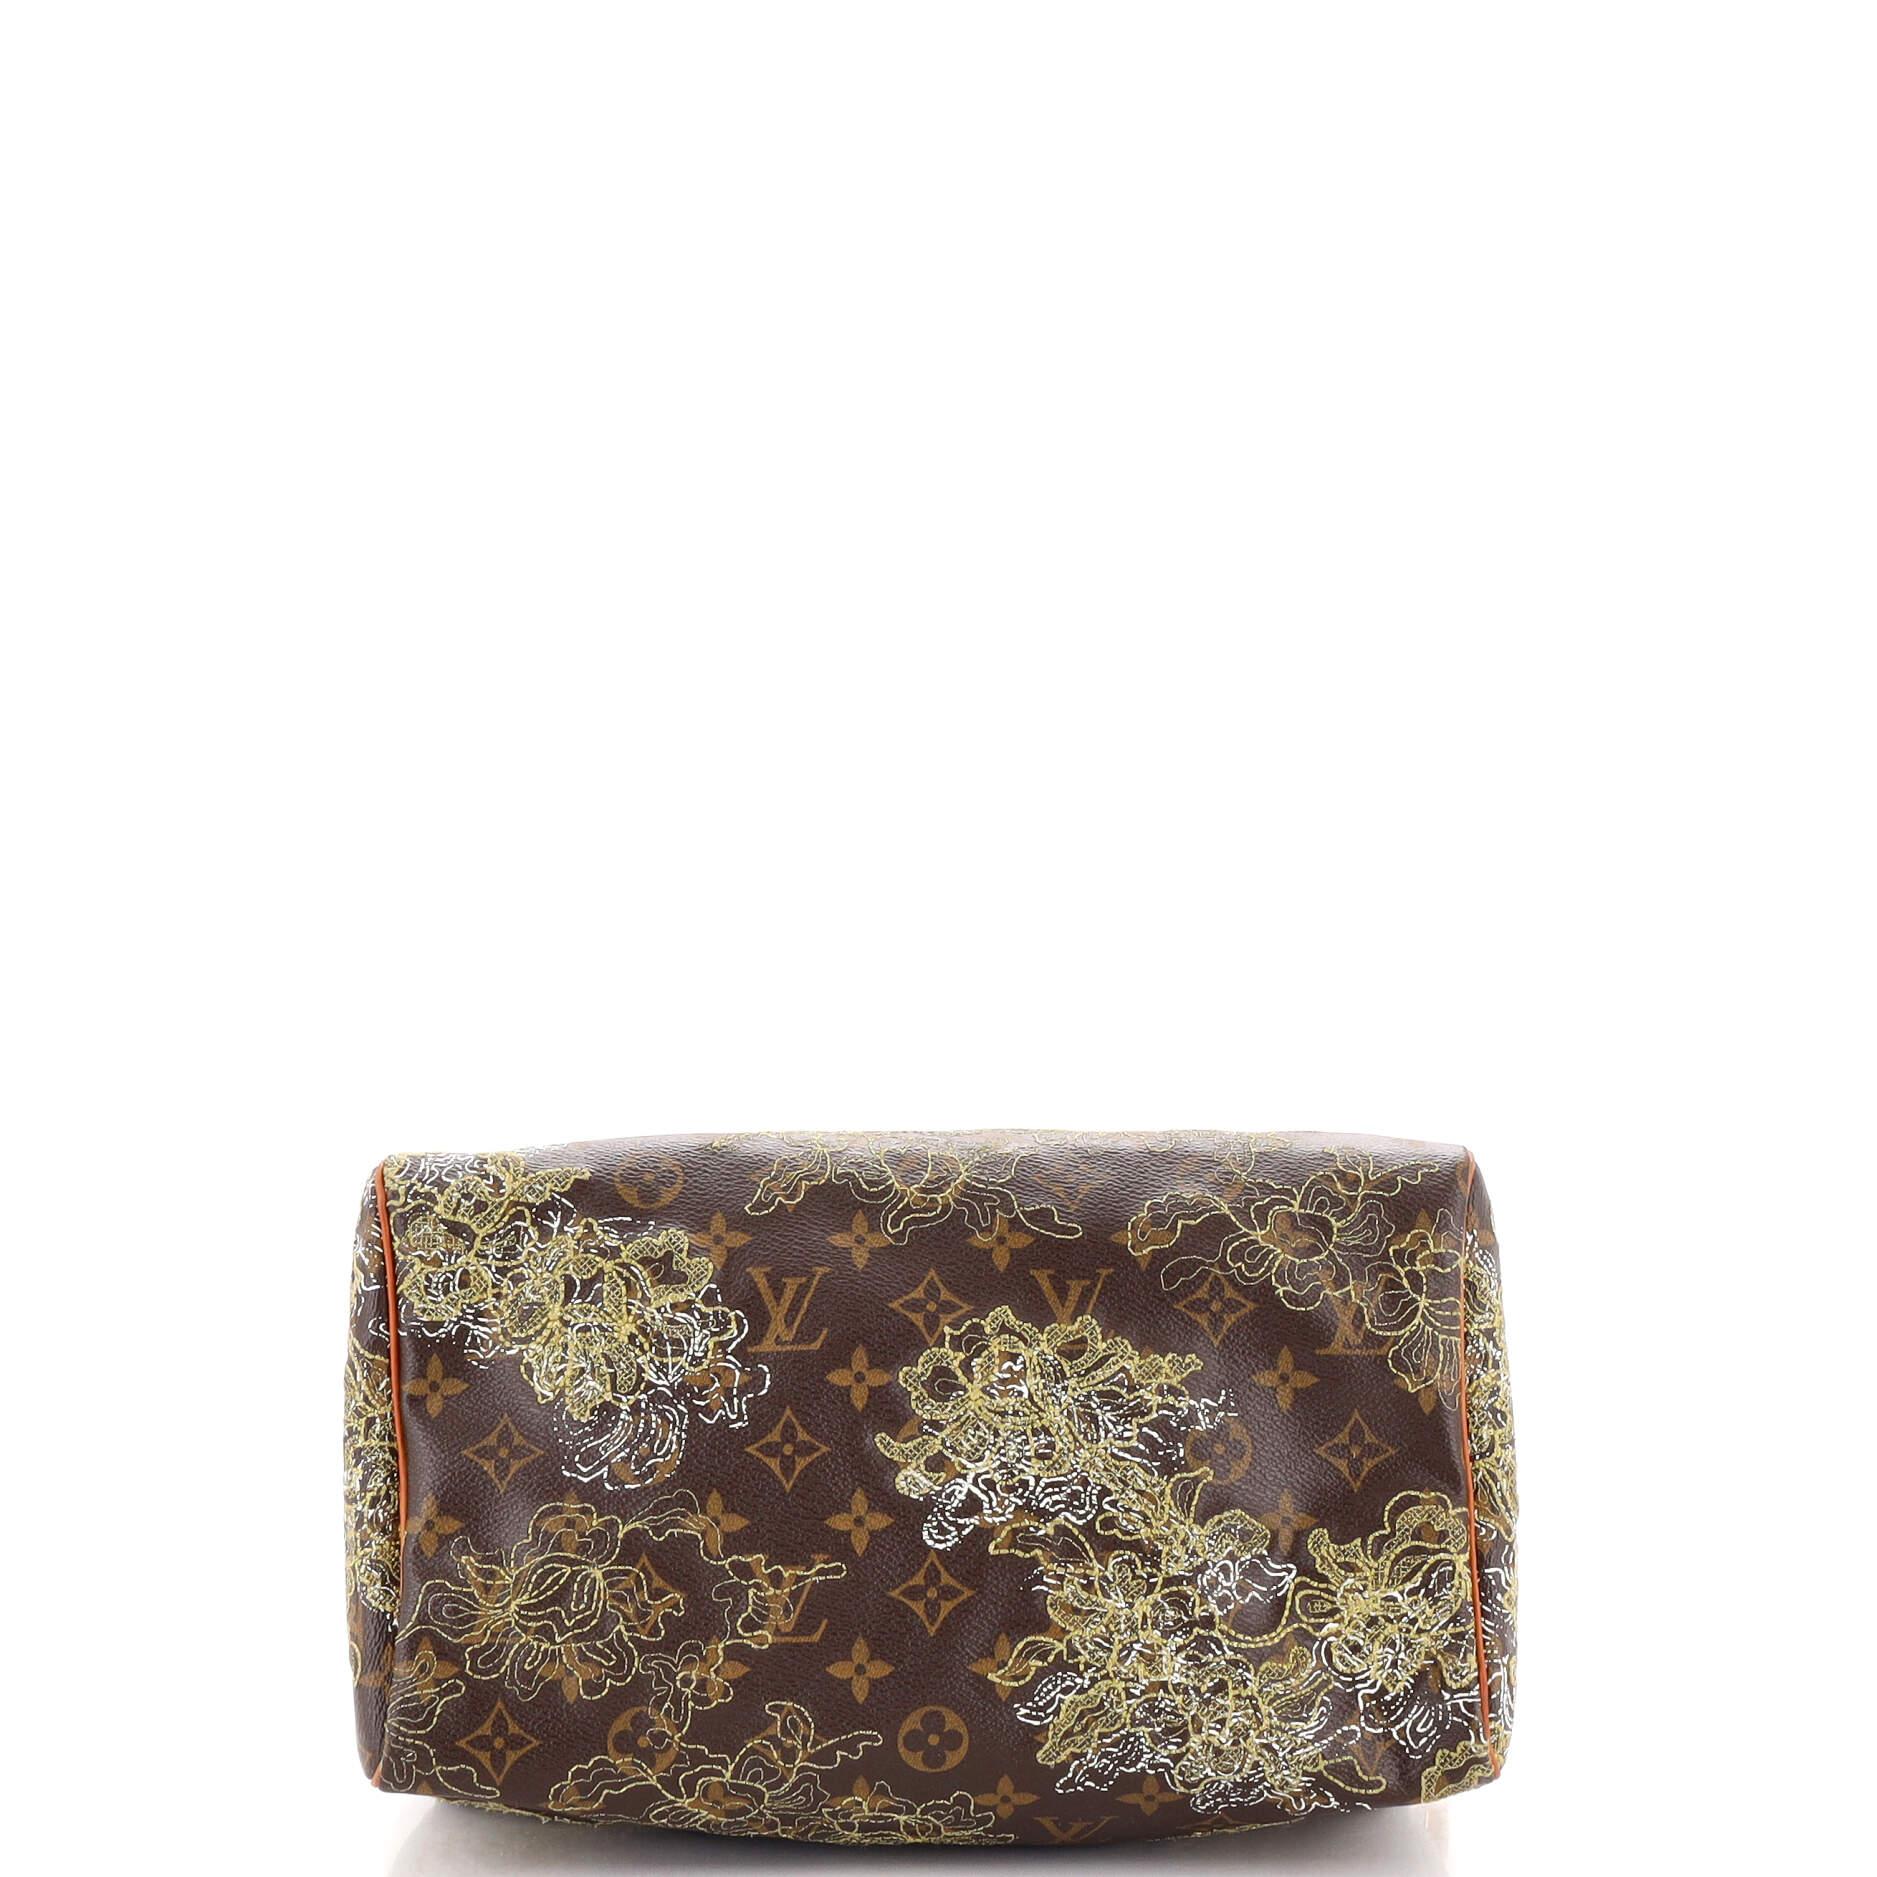 Louis Vuitton Speedy Handbag Limited Edition Monogram Dentelle 30 1